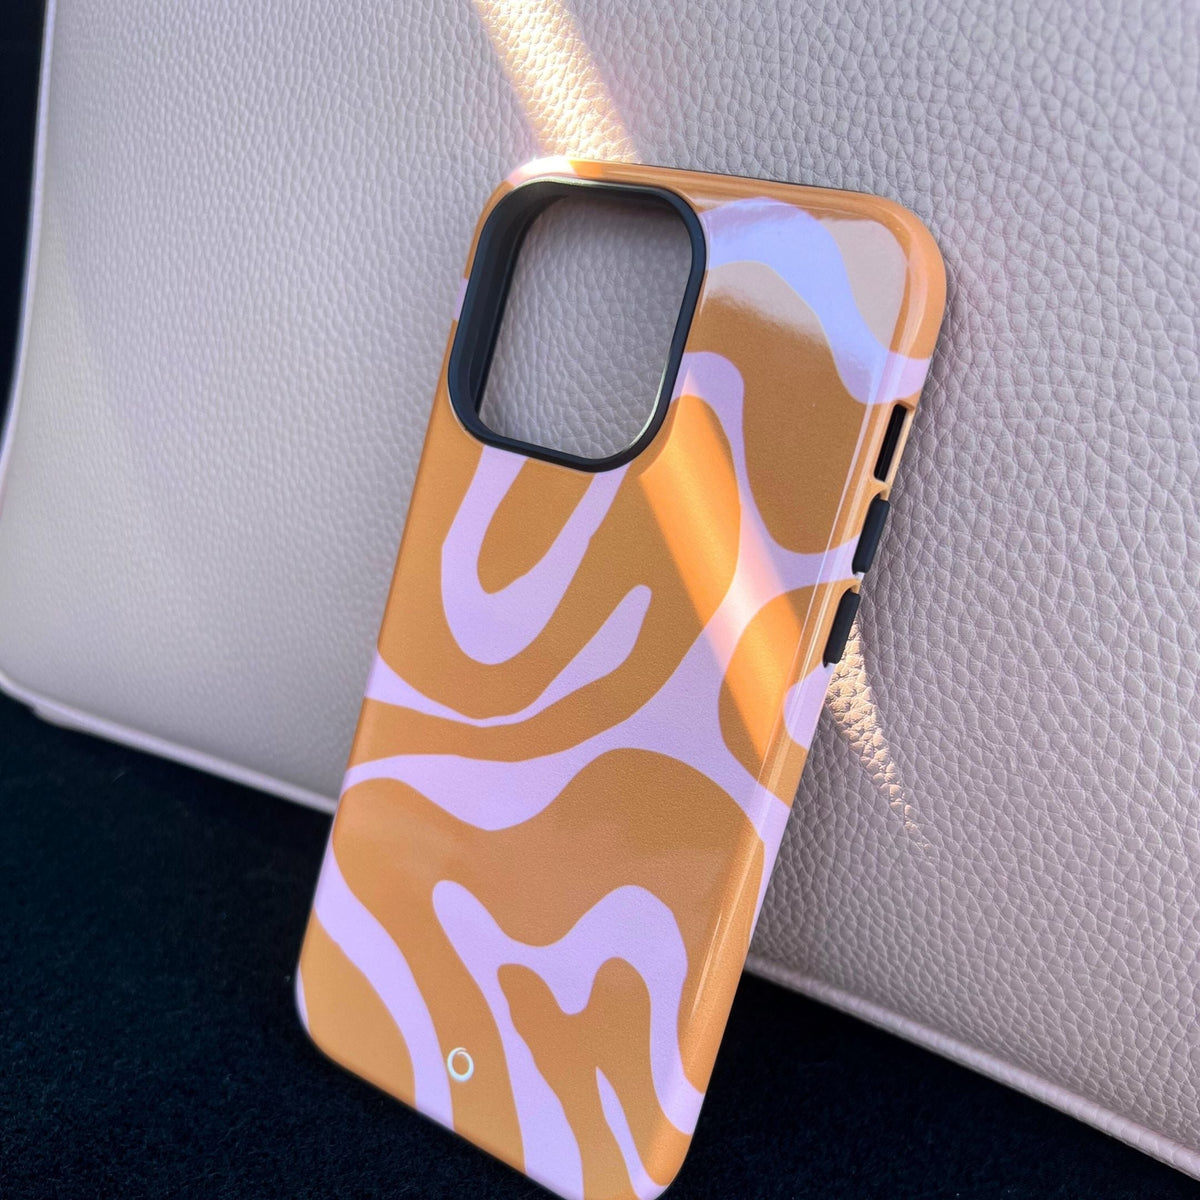 Orange Swirl iPhone Case - iPhone 11 Pro